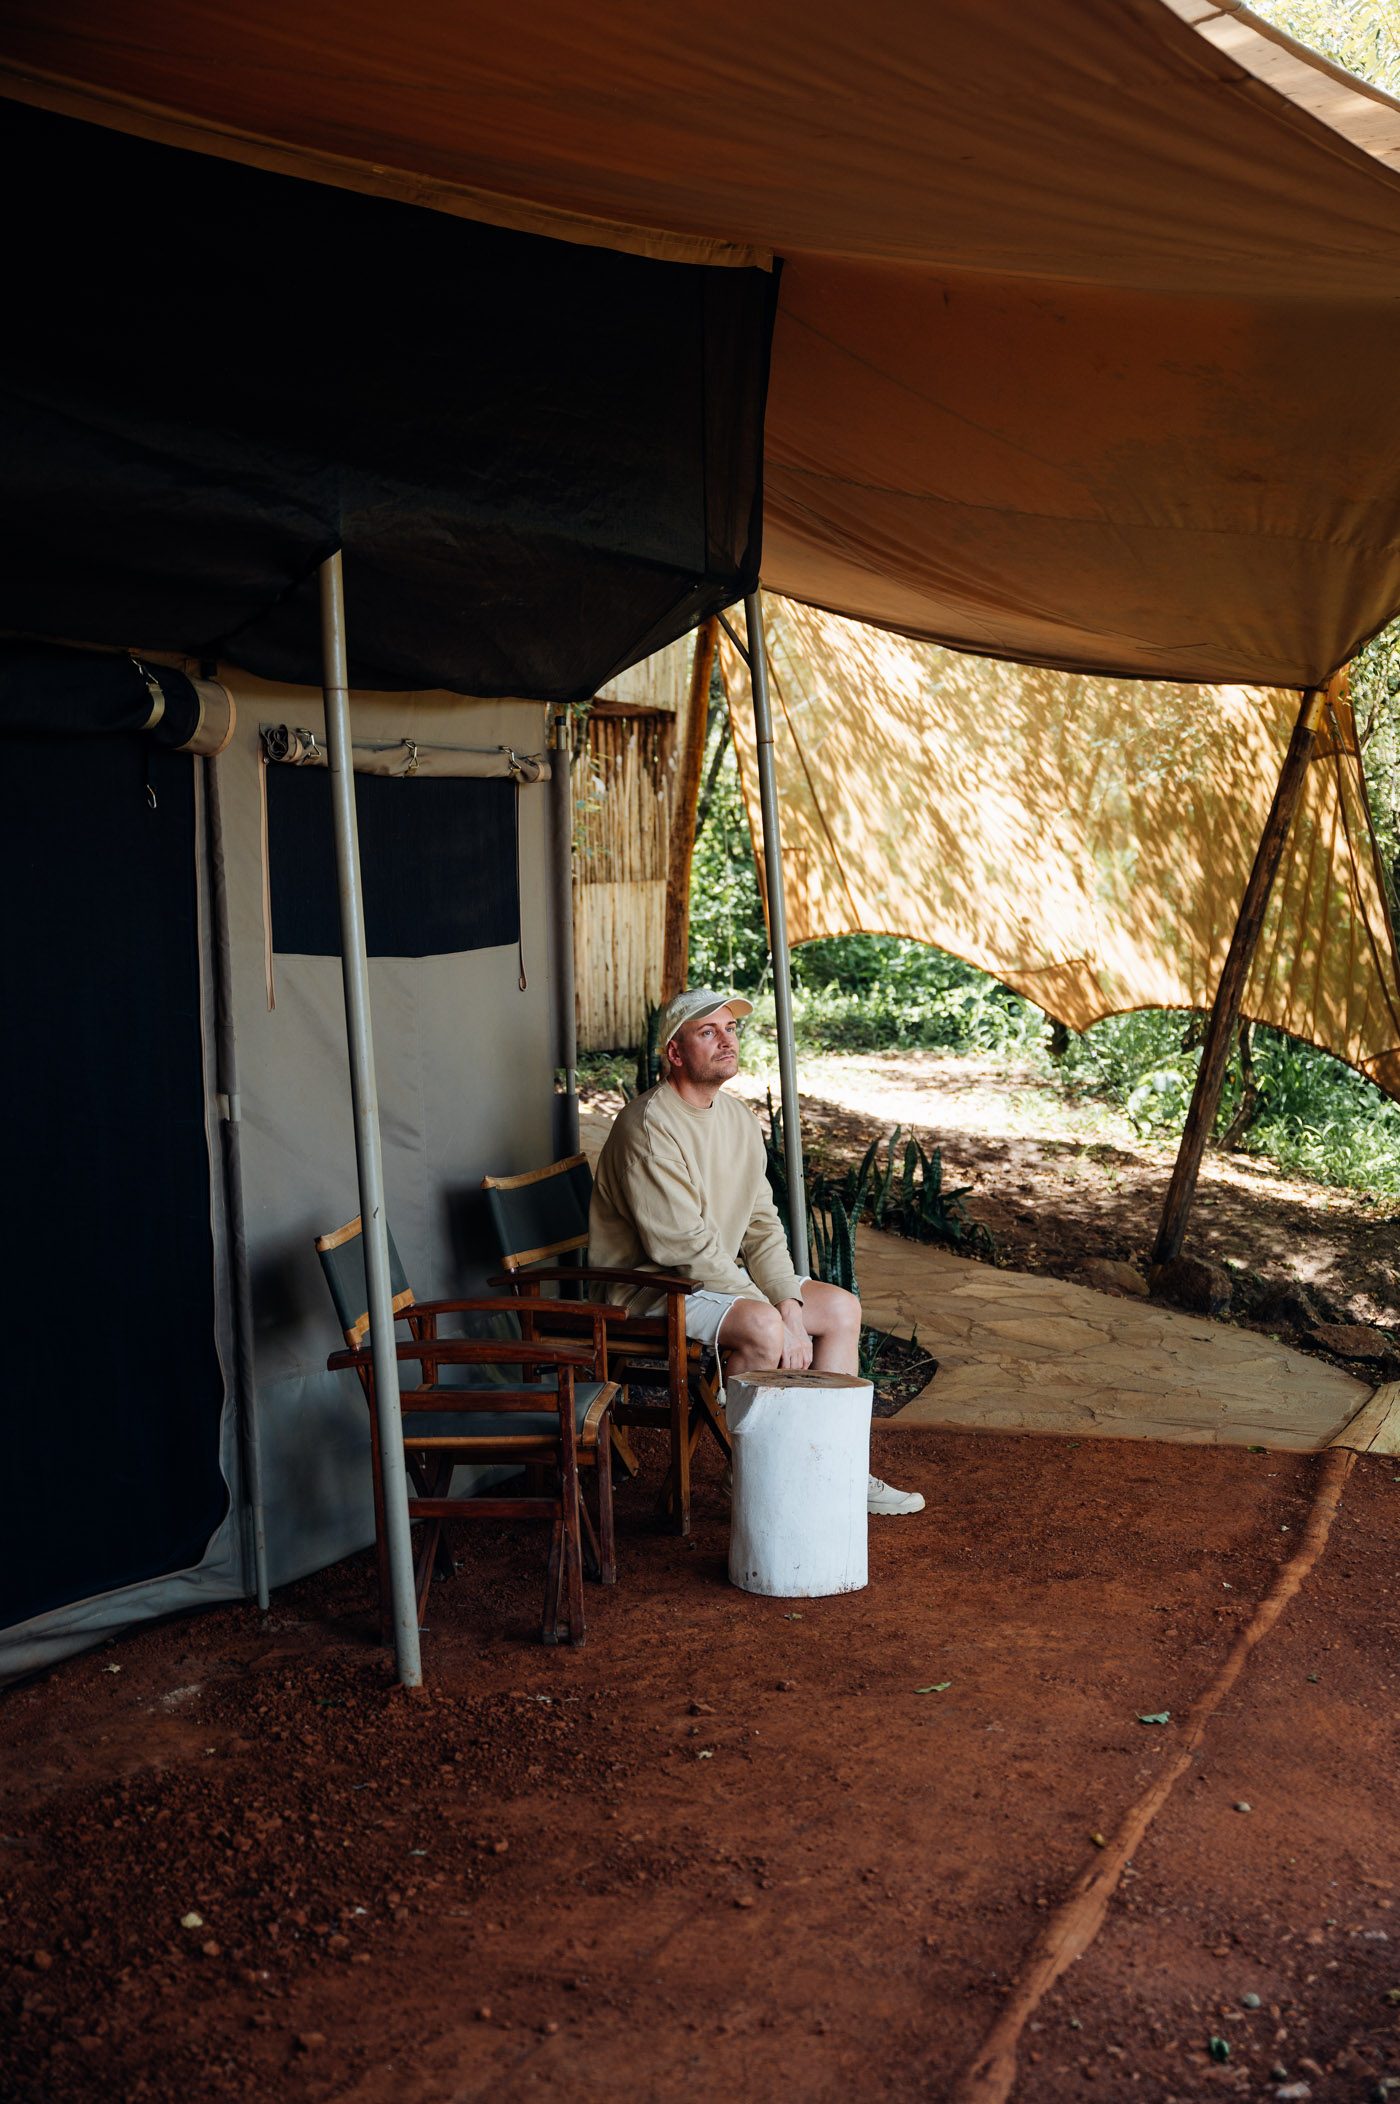 Our tent at Emboo River Camp in the Maasai Mara in Kenya